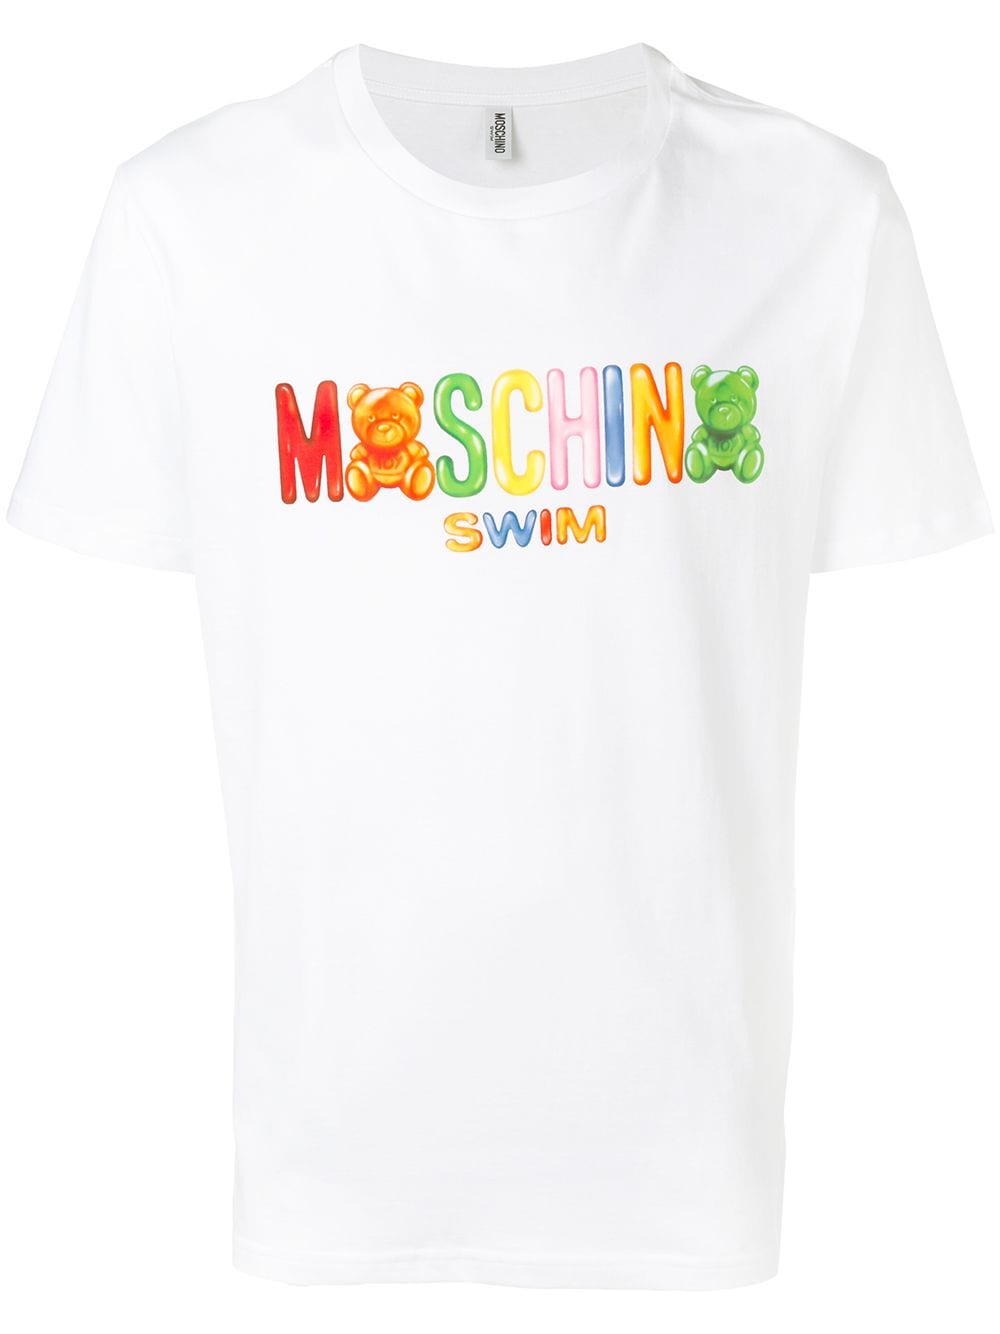 фото Moschino футболка с логотипом и принтом медведя